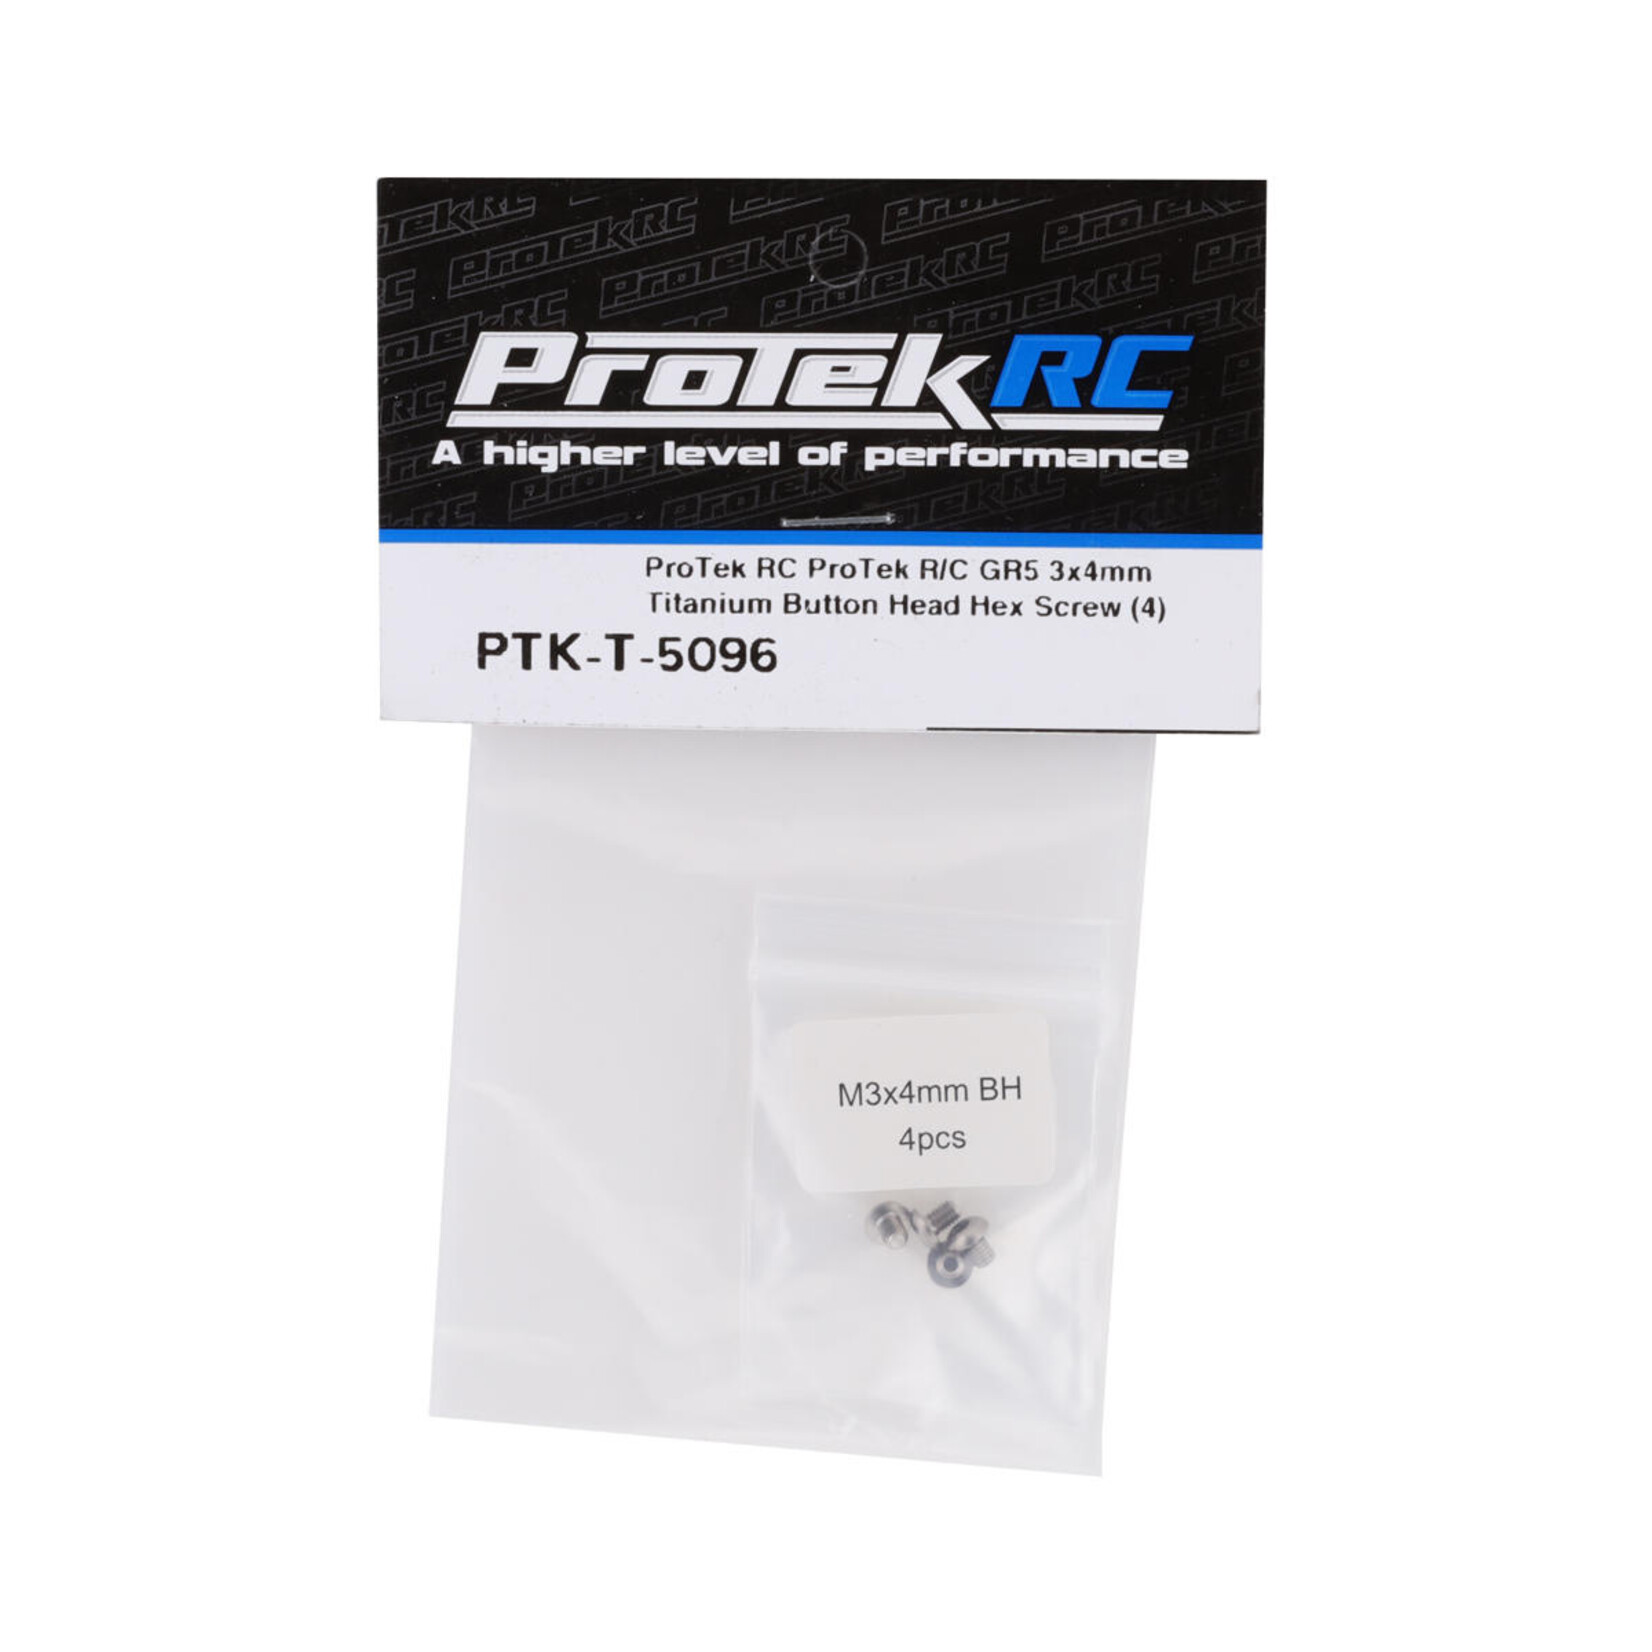 ProTek RC ProTek RC 3x4mm "Grade 5" Titanium Button Head Hex Screw (4) #PTK-T-5096